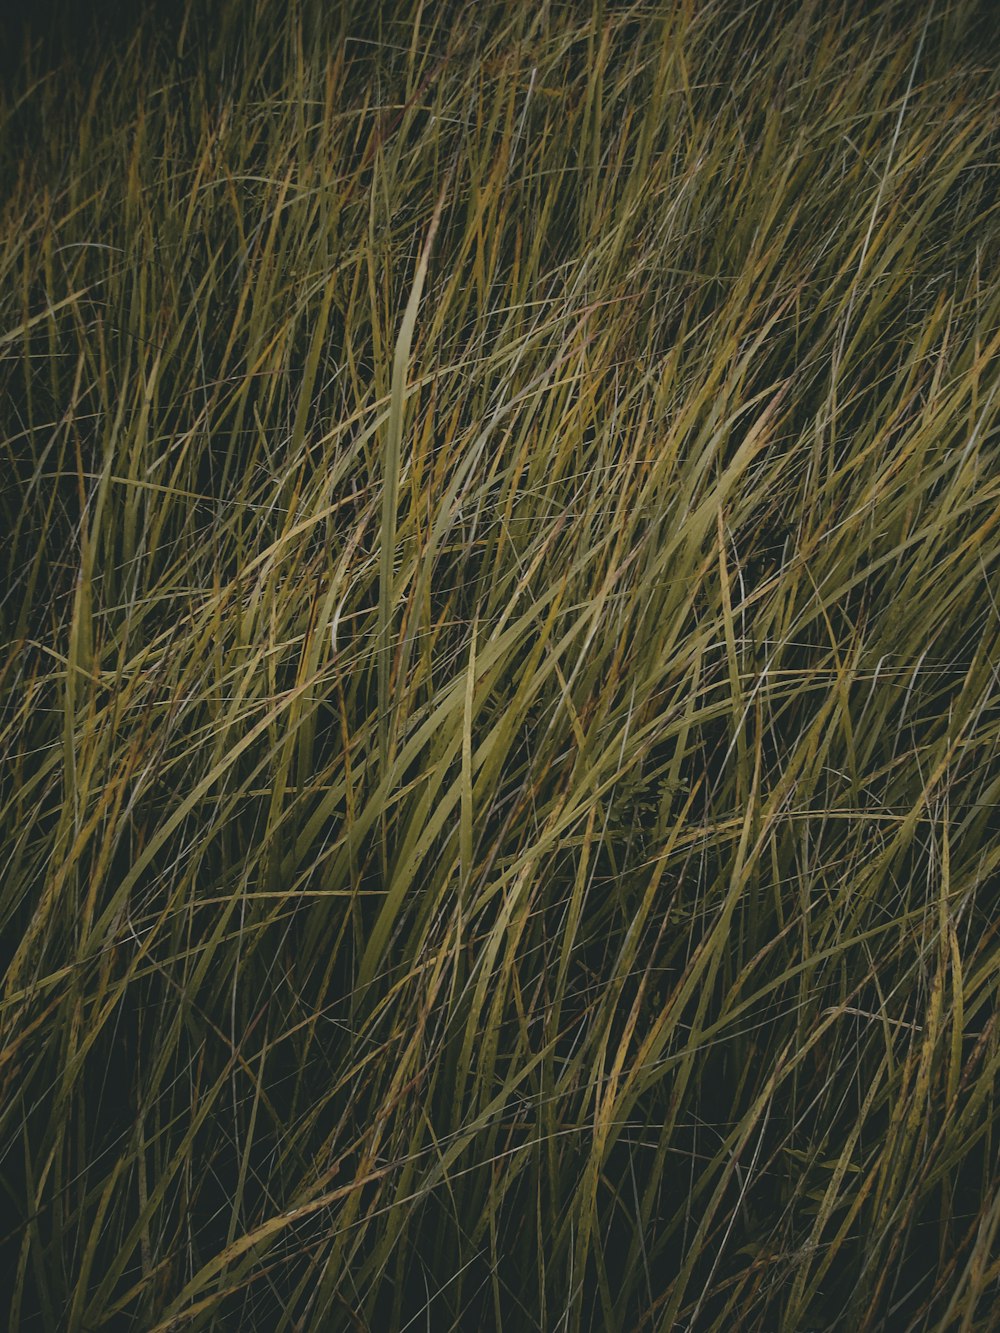 a close up of a bunch of tall grass